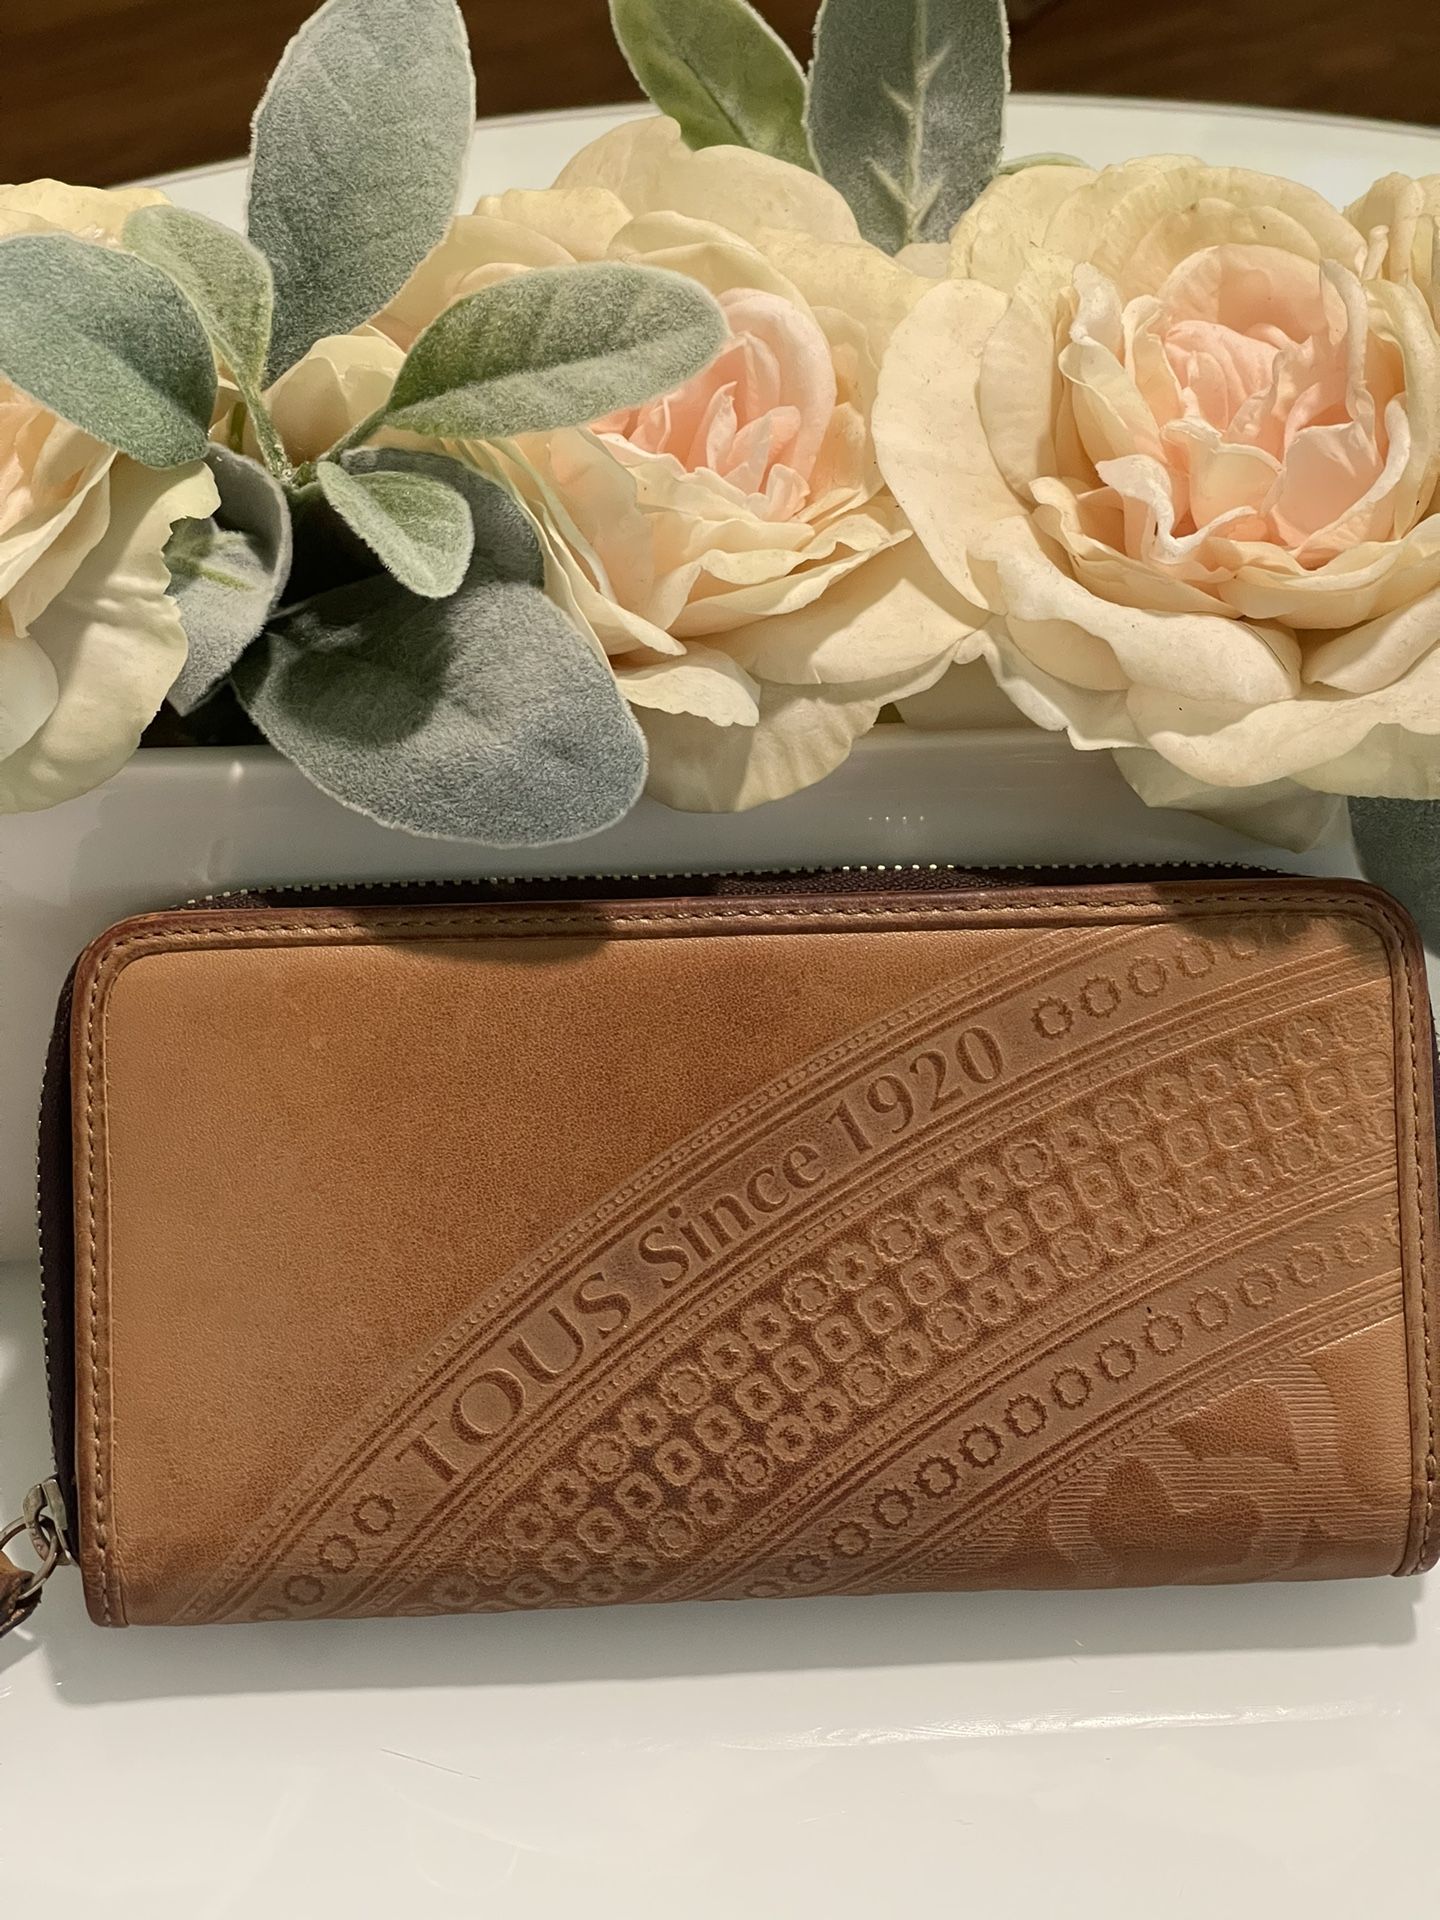 TOUS Since 1920 Zipper Wallet Tan Leather Engraved 